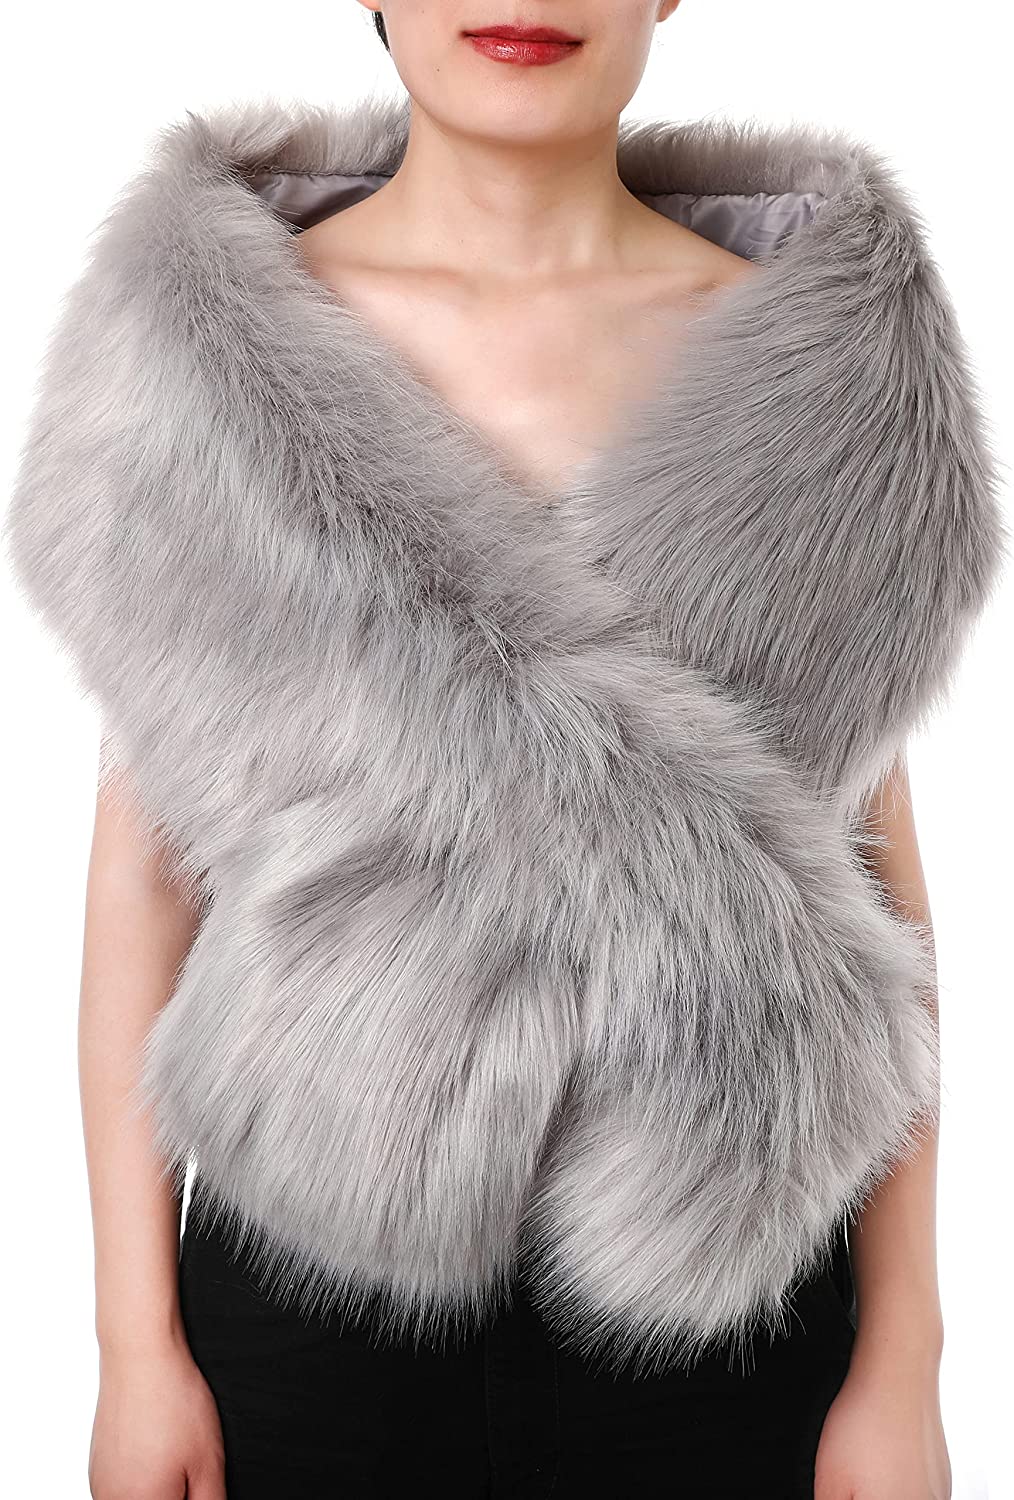 Dikoaina Women's Winter Fake Faux Fur Scarf Wrap Collar Shawl Shrug